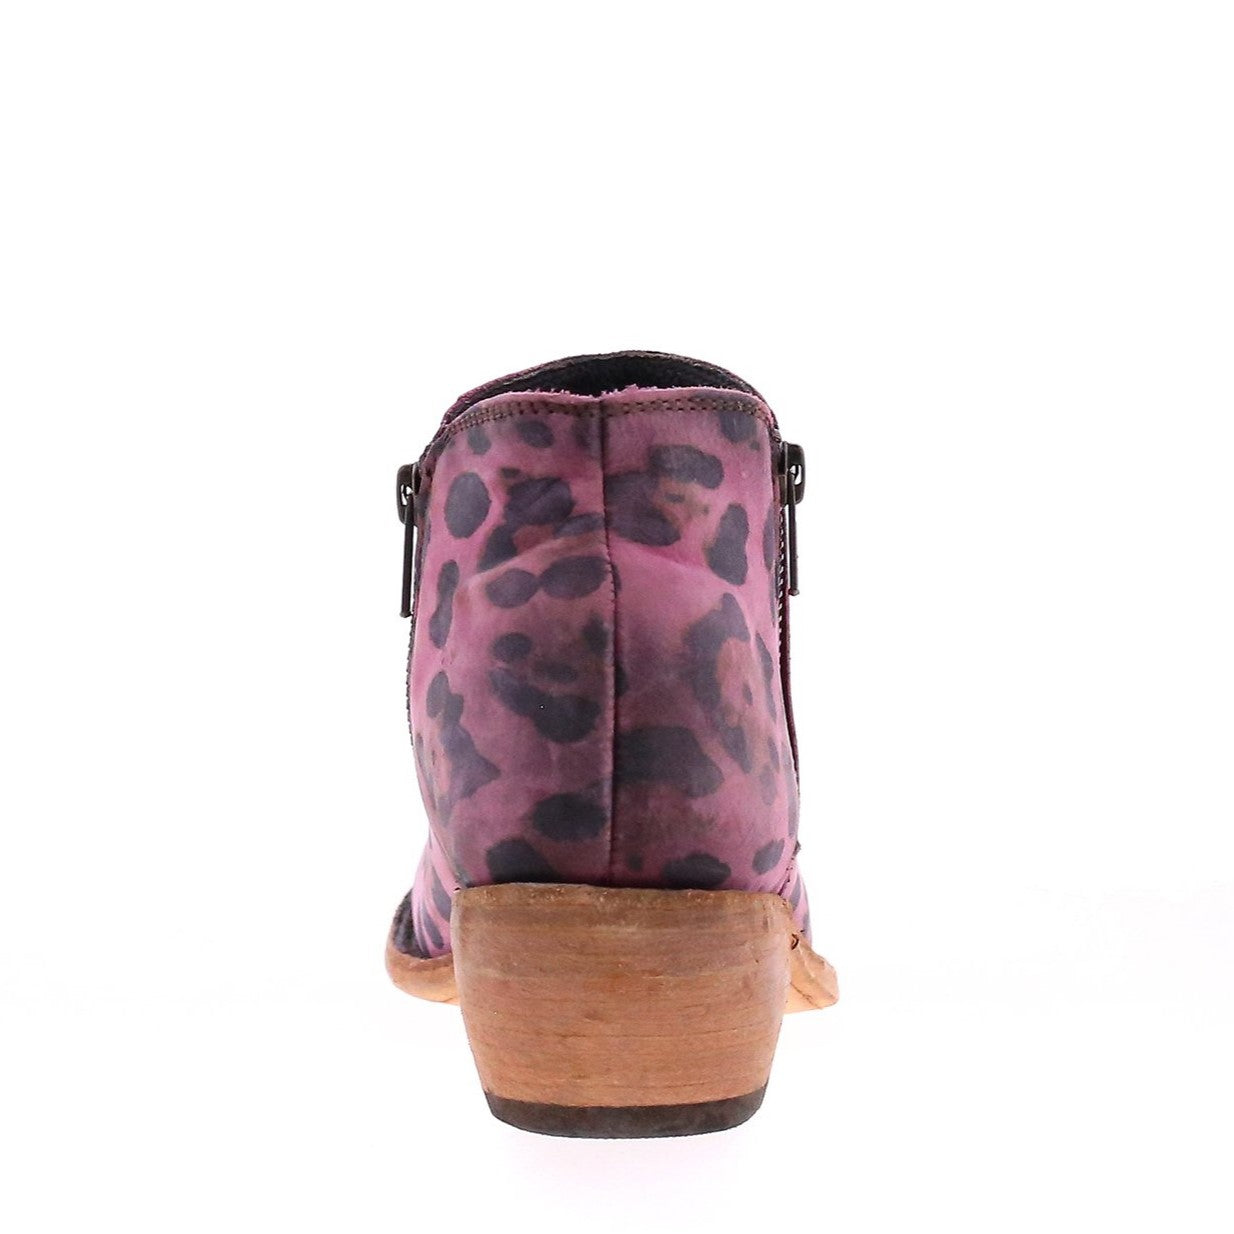 Liberty Black Ladies "Inara" Leopard Lipstick Pink Ankle Booties LB-711137W